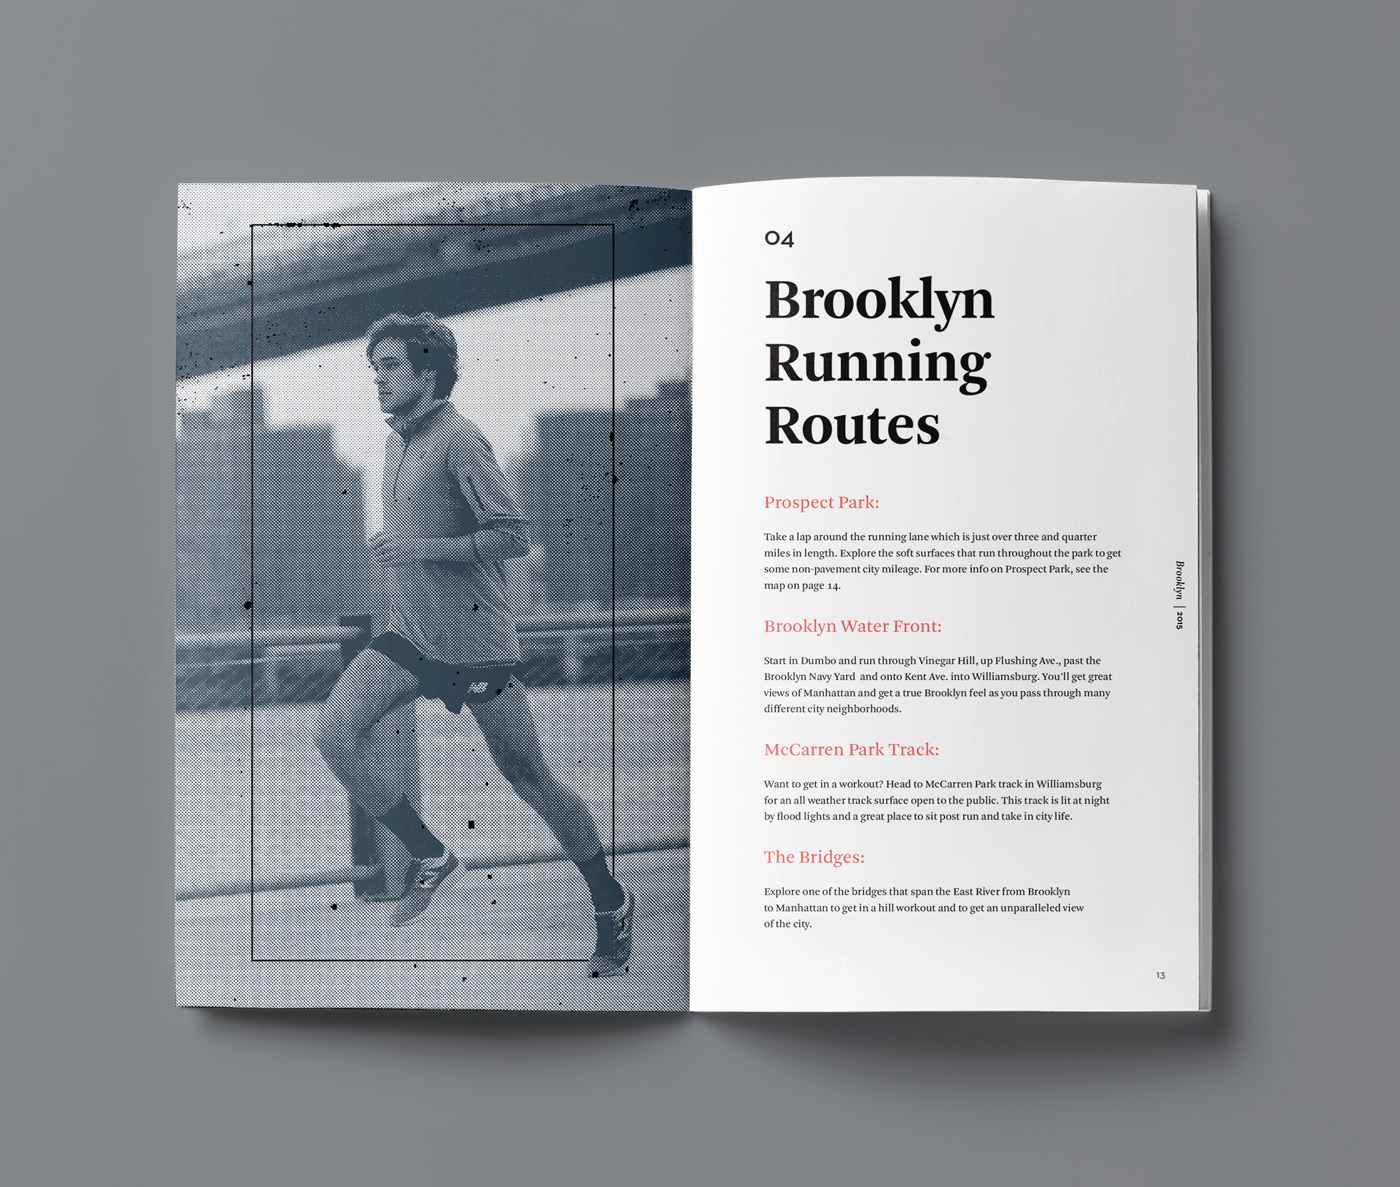 New Balance - Brooklyn Marathon Running Guide - The Heads of State